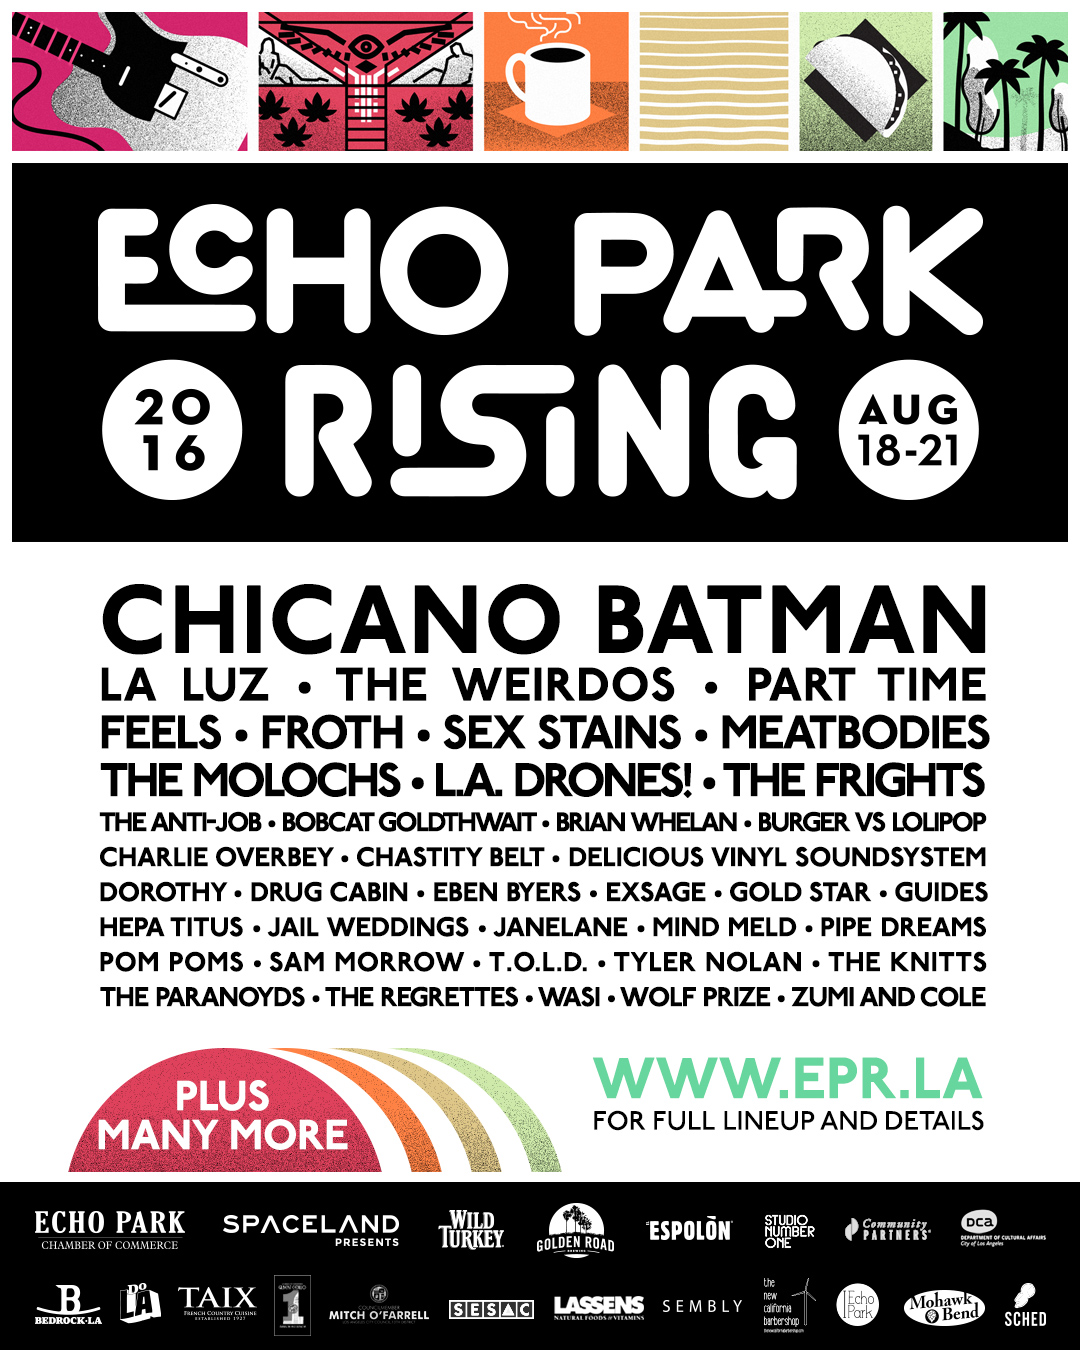 Echo Park Rising 2016